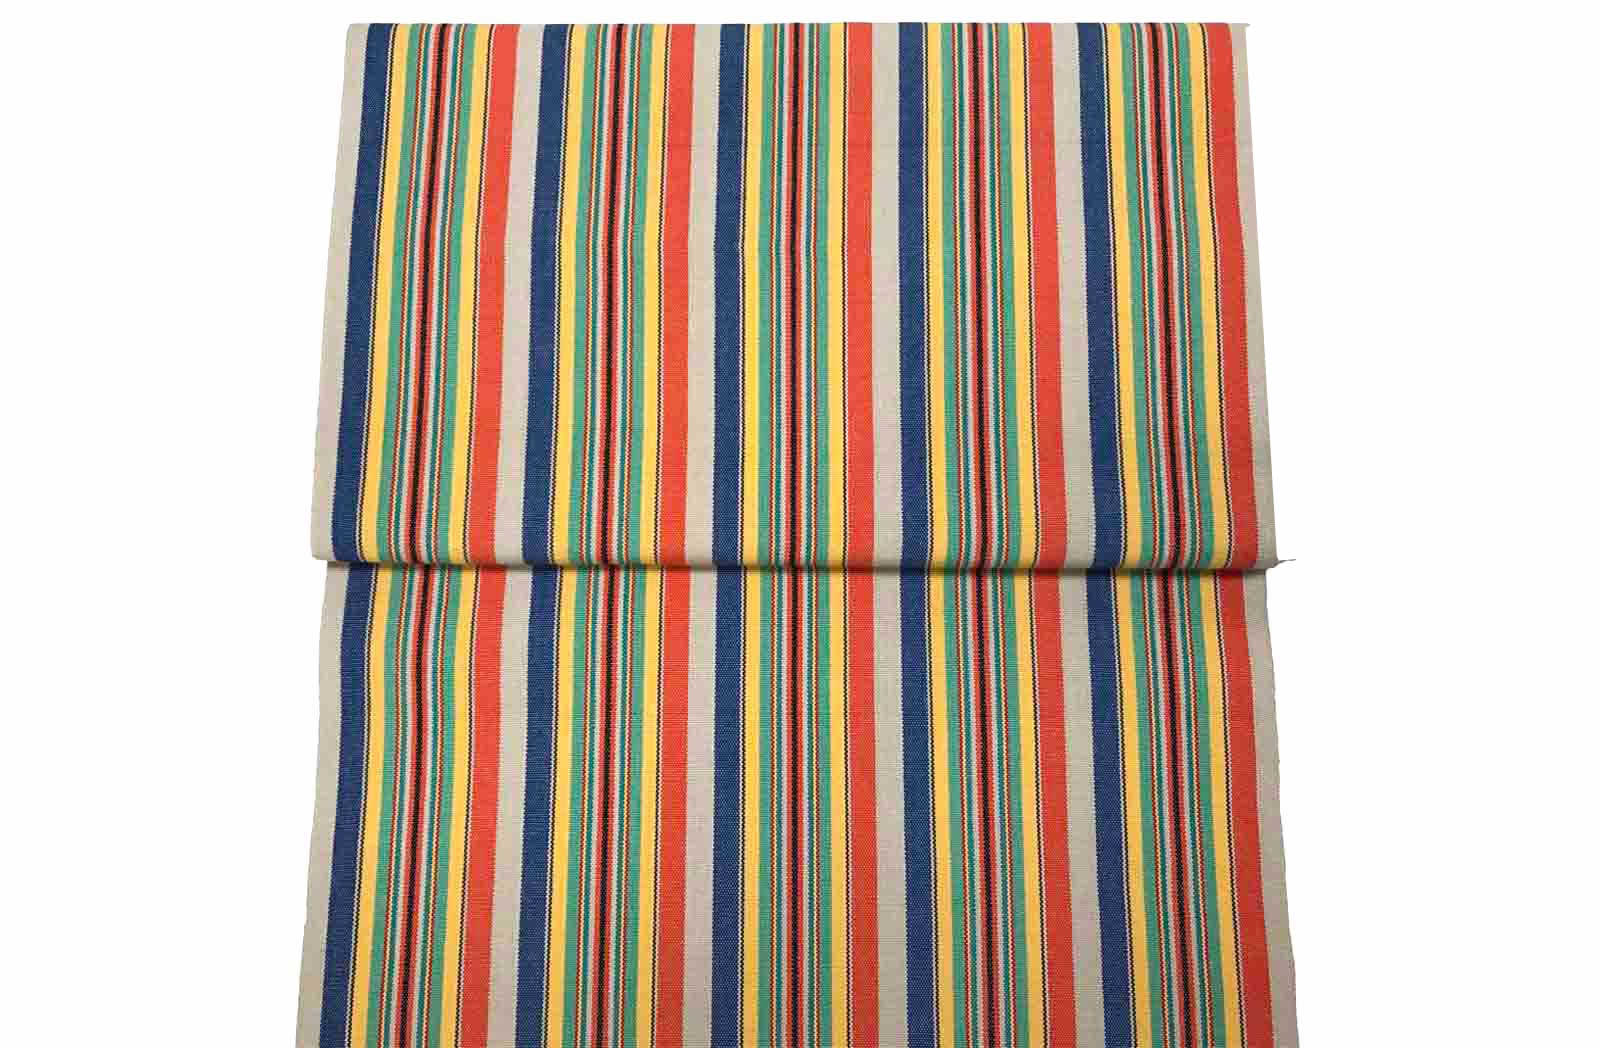 Vintage Deckchair Fabric - Solitaire Stripe